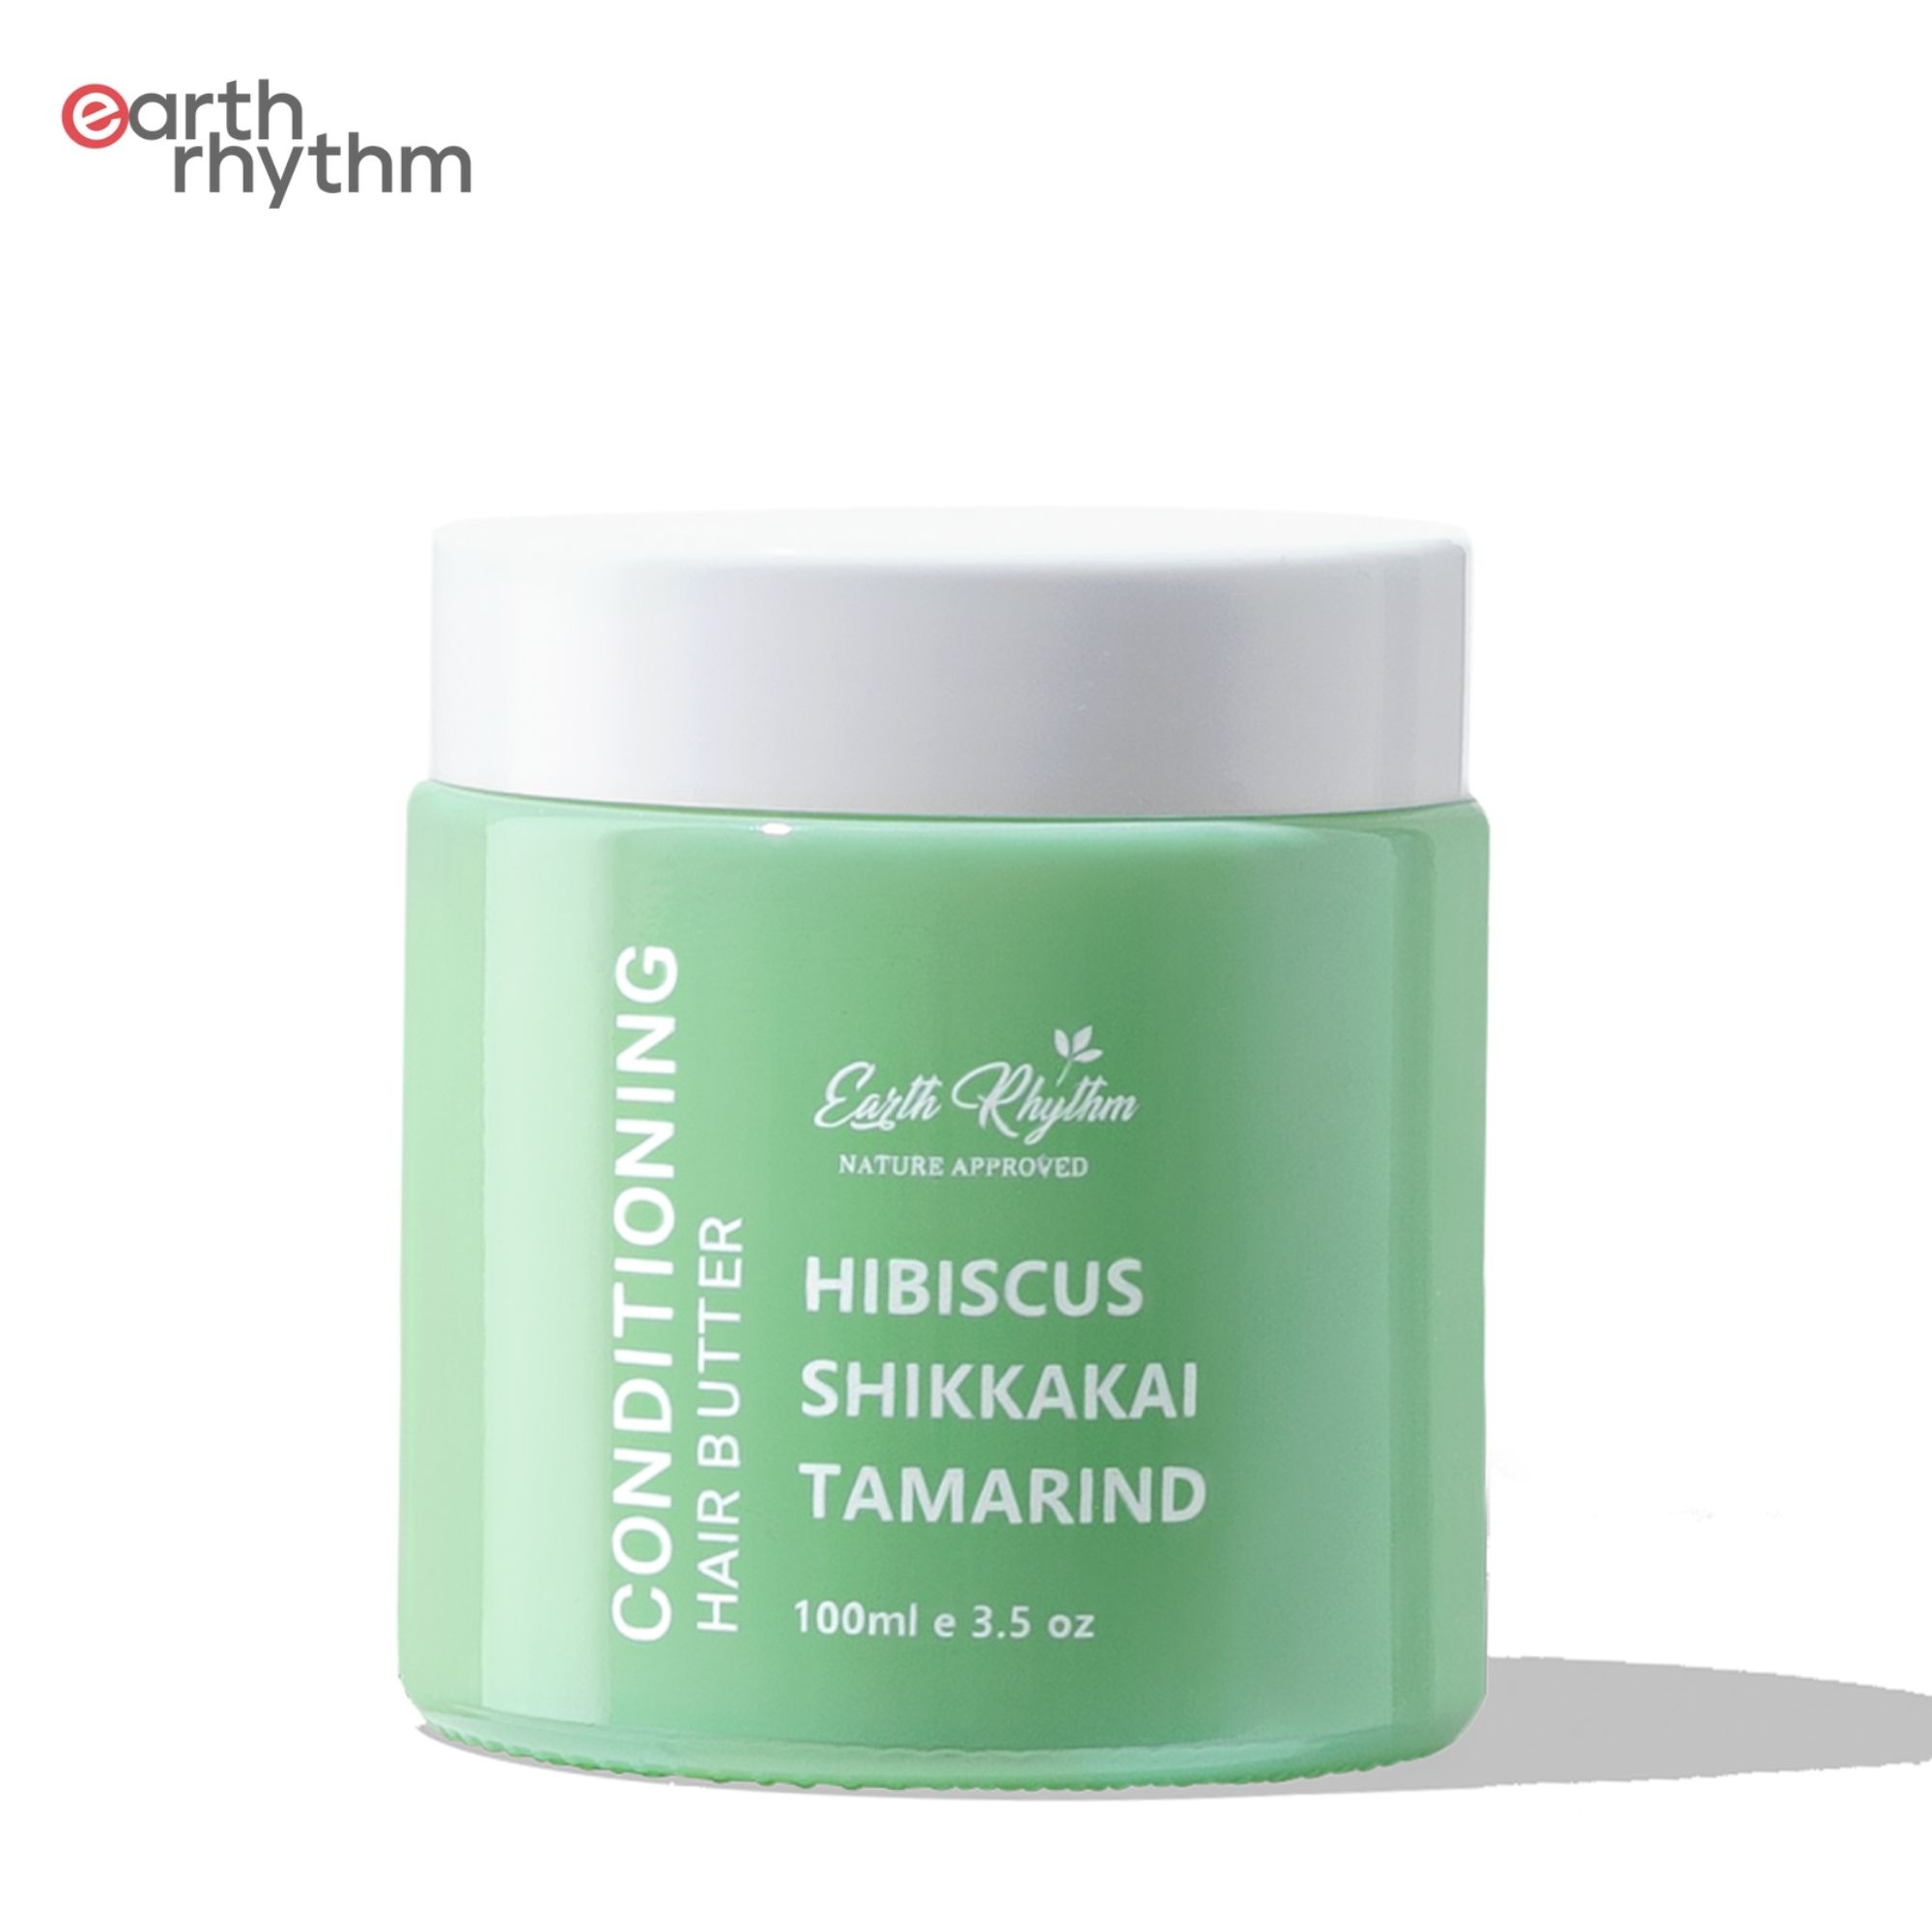 Earth Rhythm Deep Conditioning Hair Butter with Hibiscus, Shikkakai & Tamarind - 100 ml